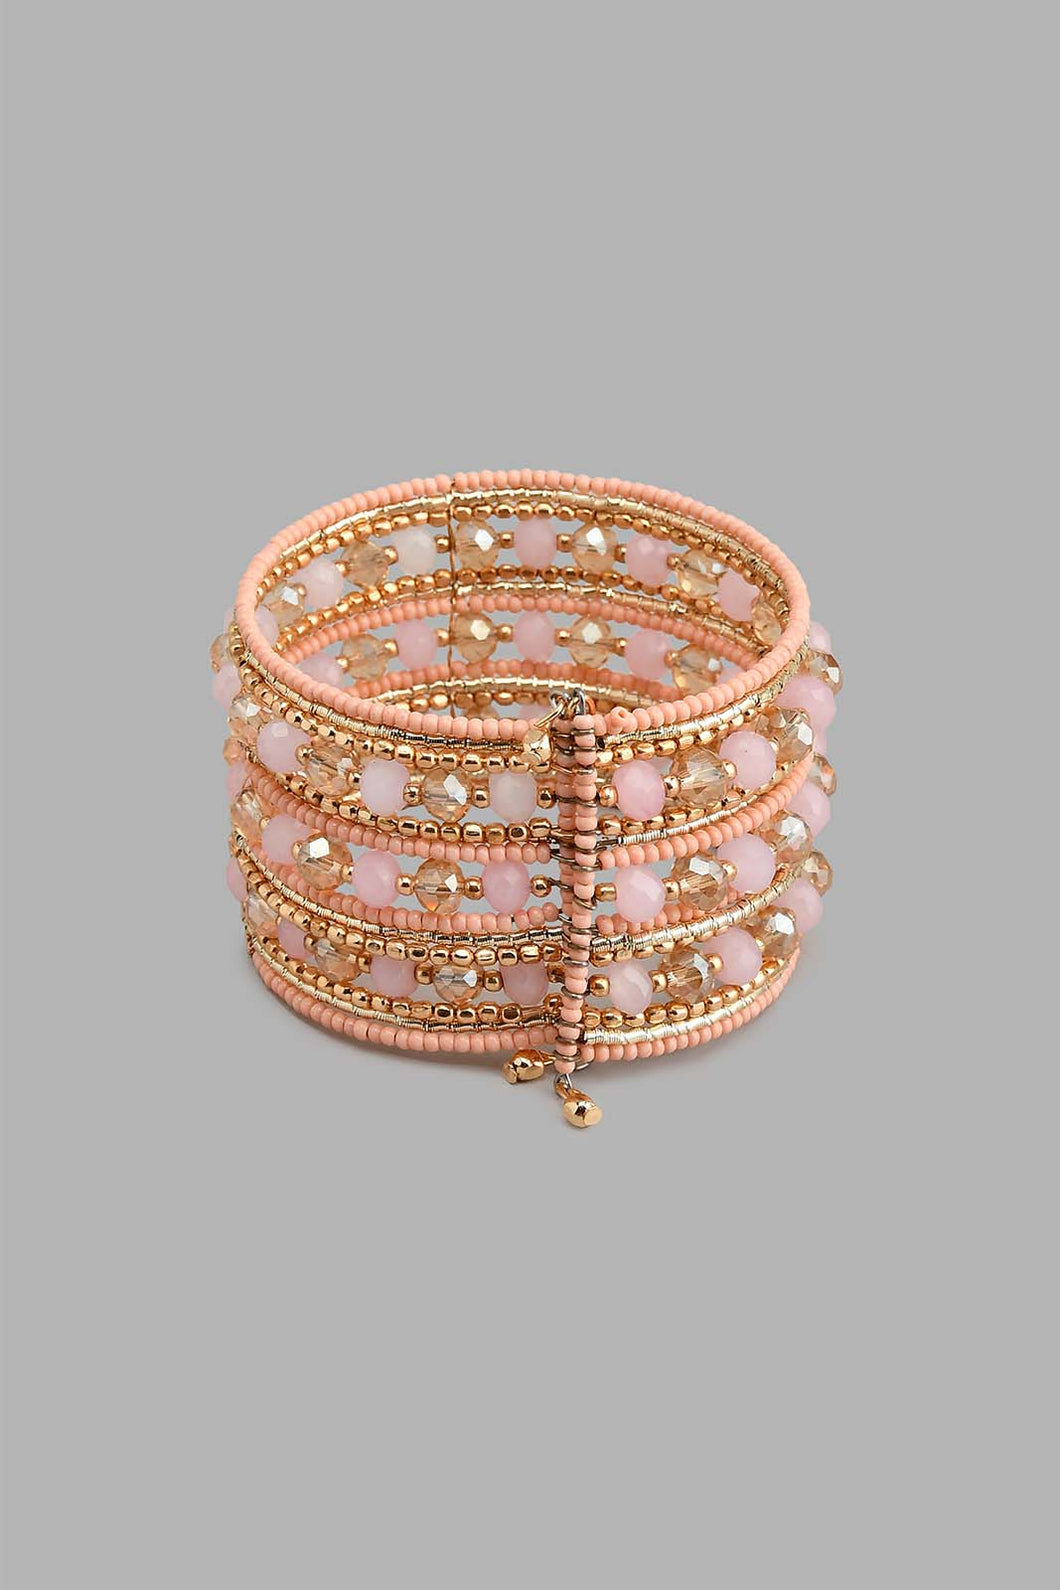 Gold And Pink Embellished Cuff Bracelet For Women أسورة مزينة باللون الذهبي والوردي للنساء